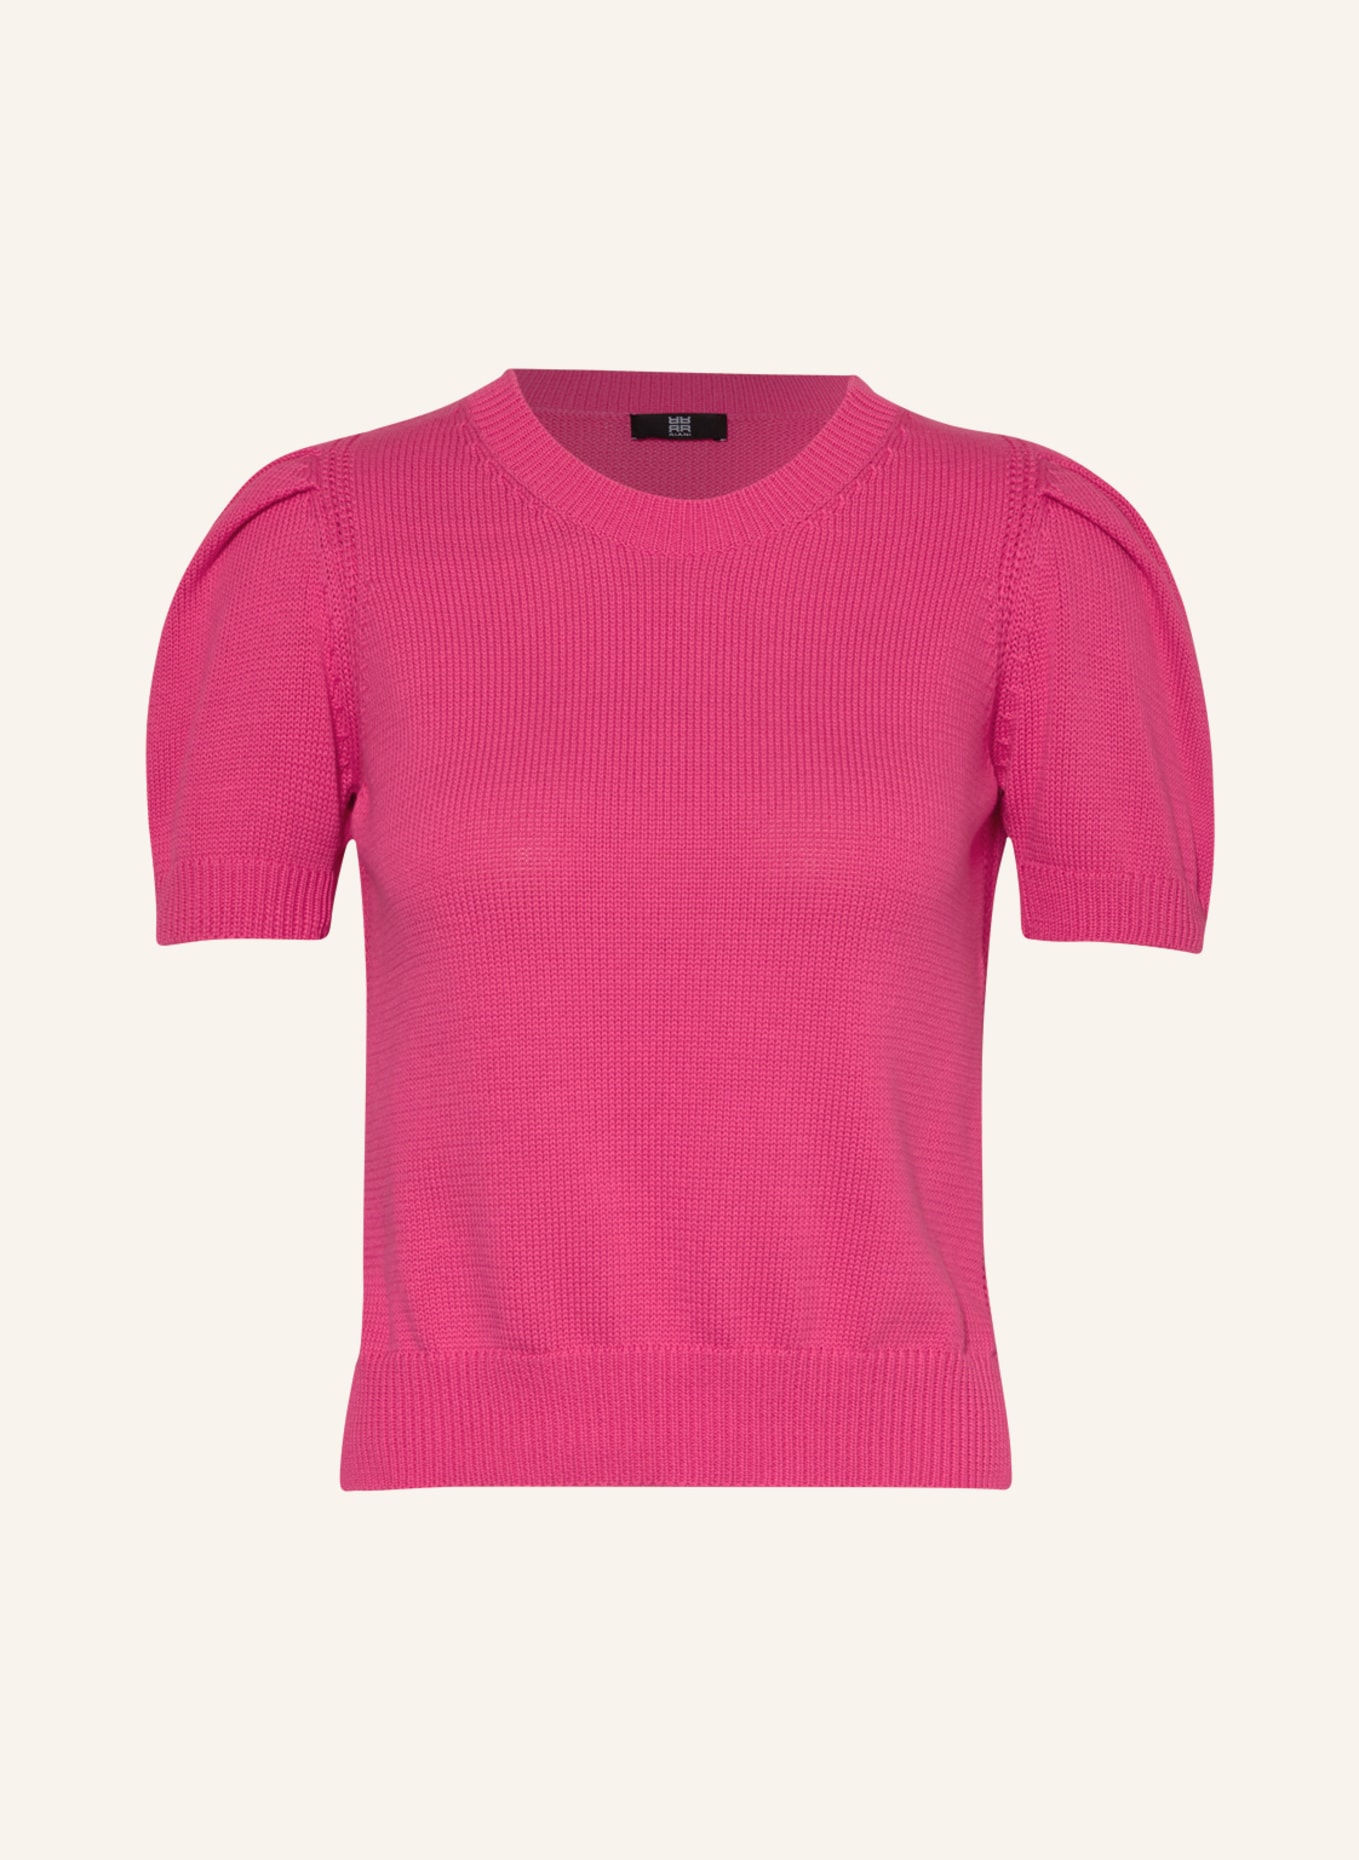 RIANI Strickshirt, Farbe: PINK (Bild 1)